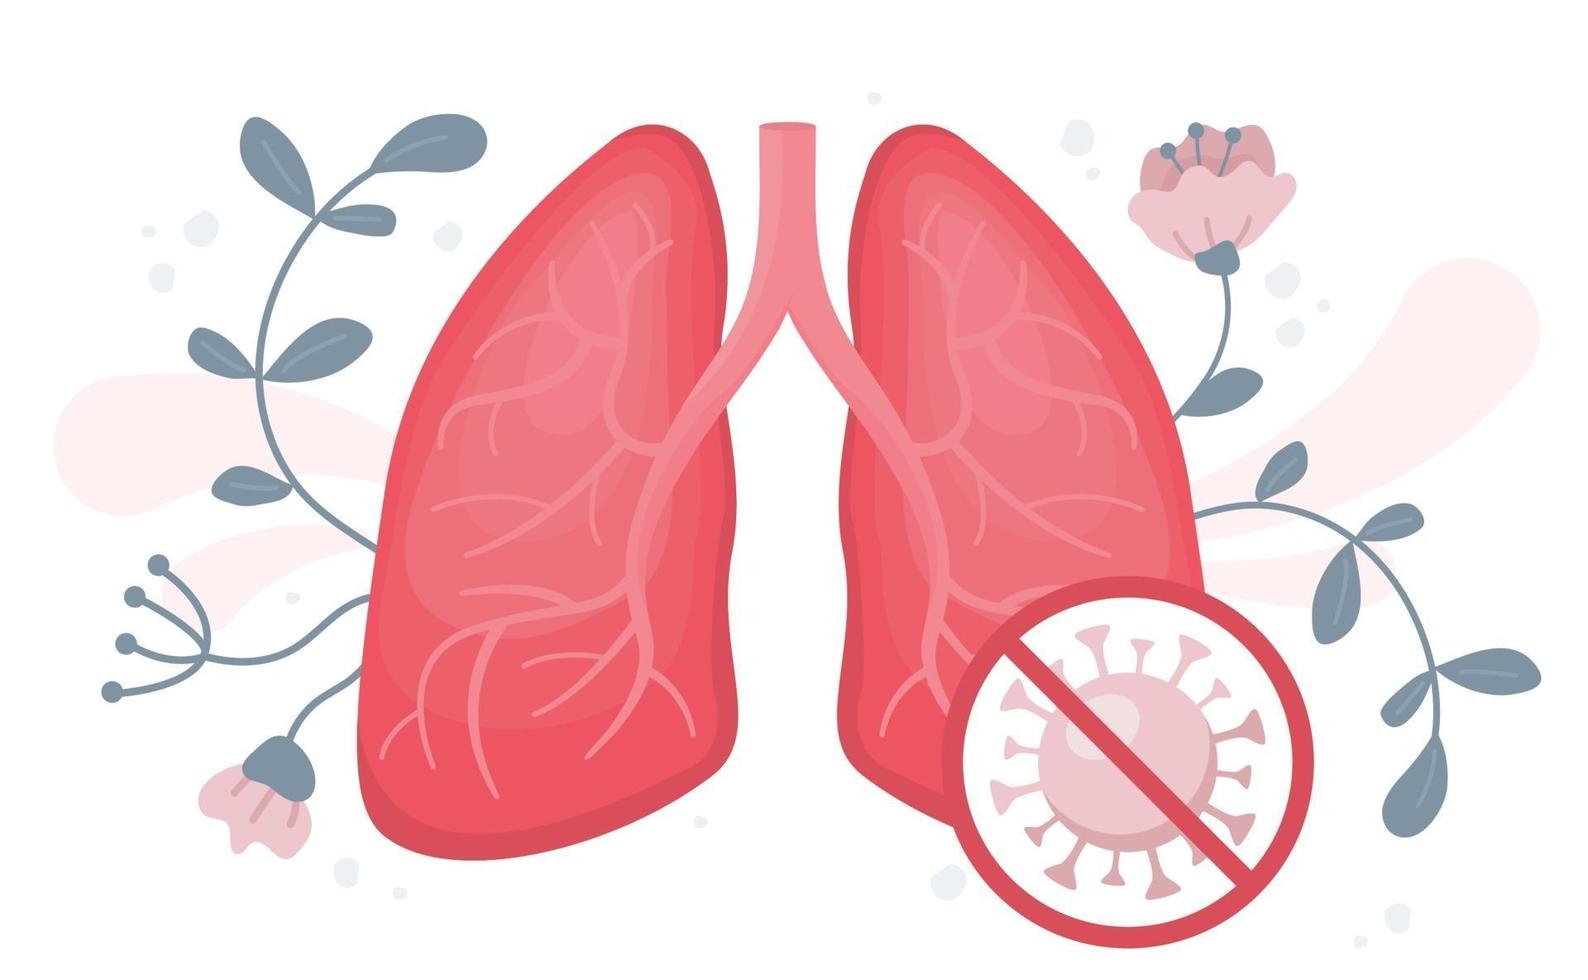 polmoni umani sani senza coronavirus o covid vettore